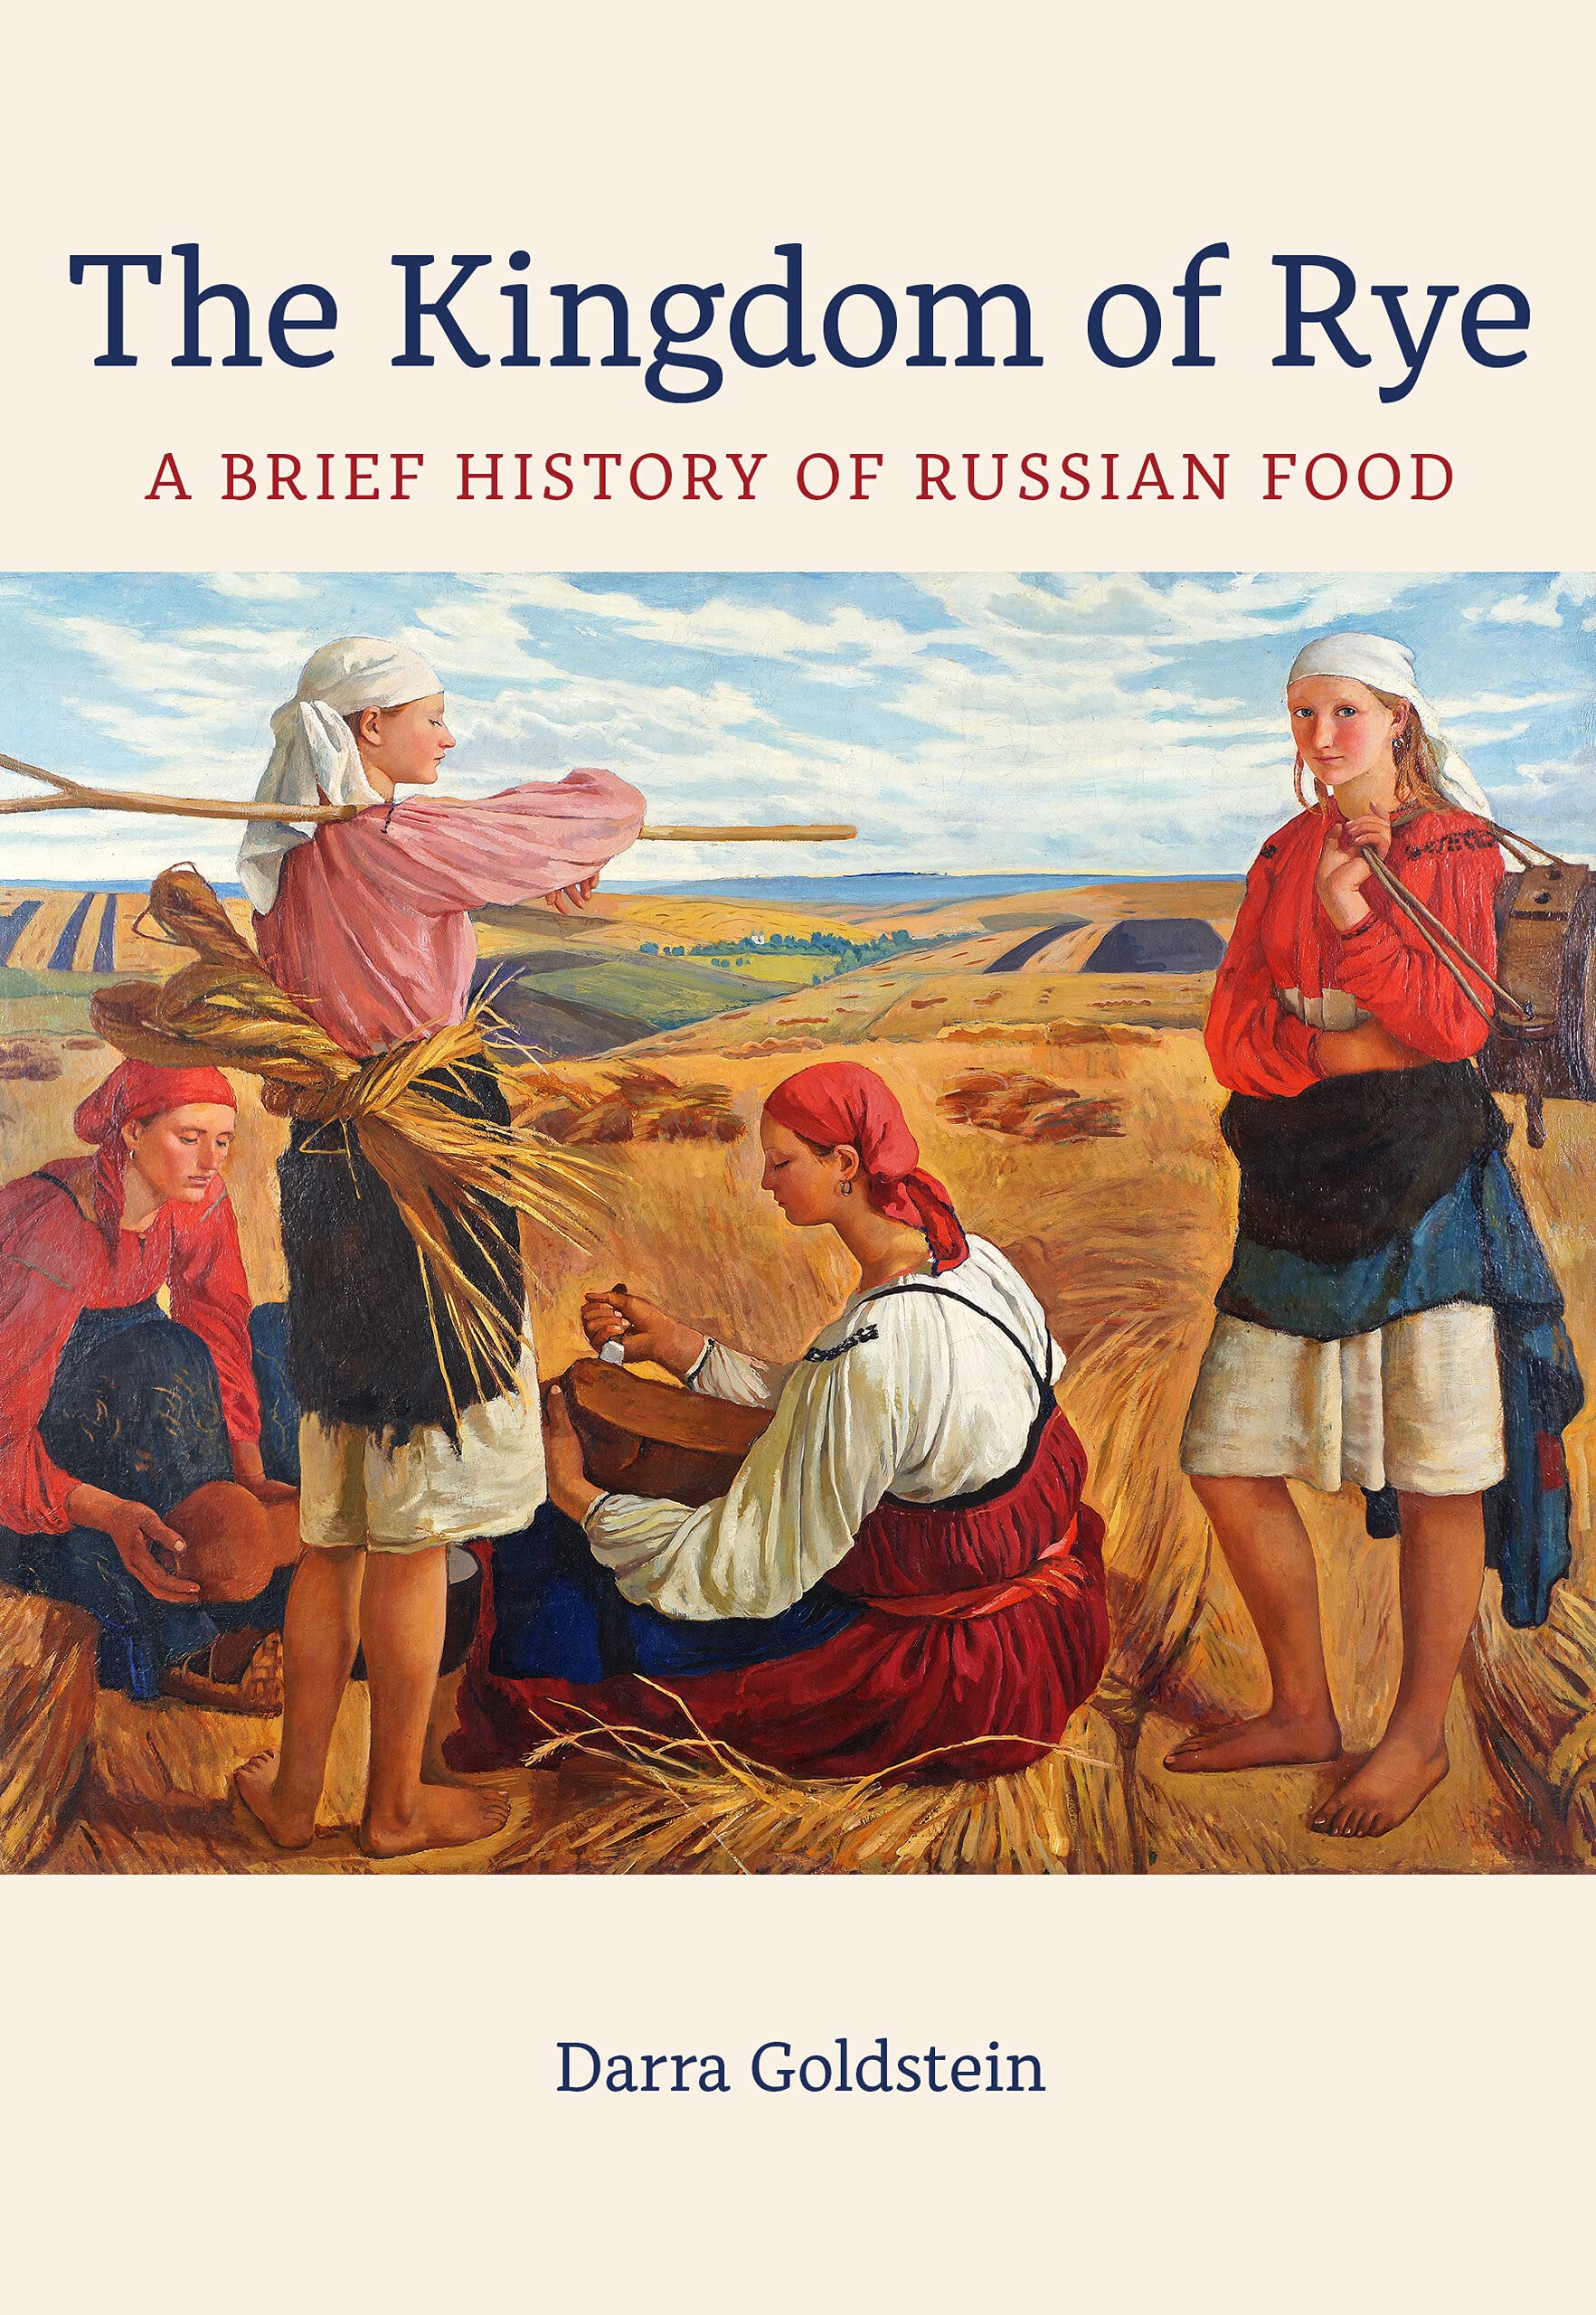 The Kingdom of Rye: A Brief History of Russian Food (Darra Goldstein)